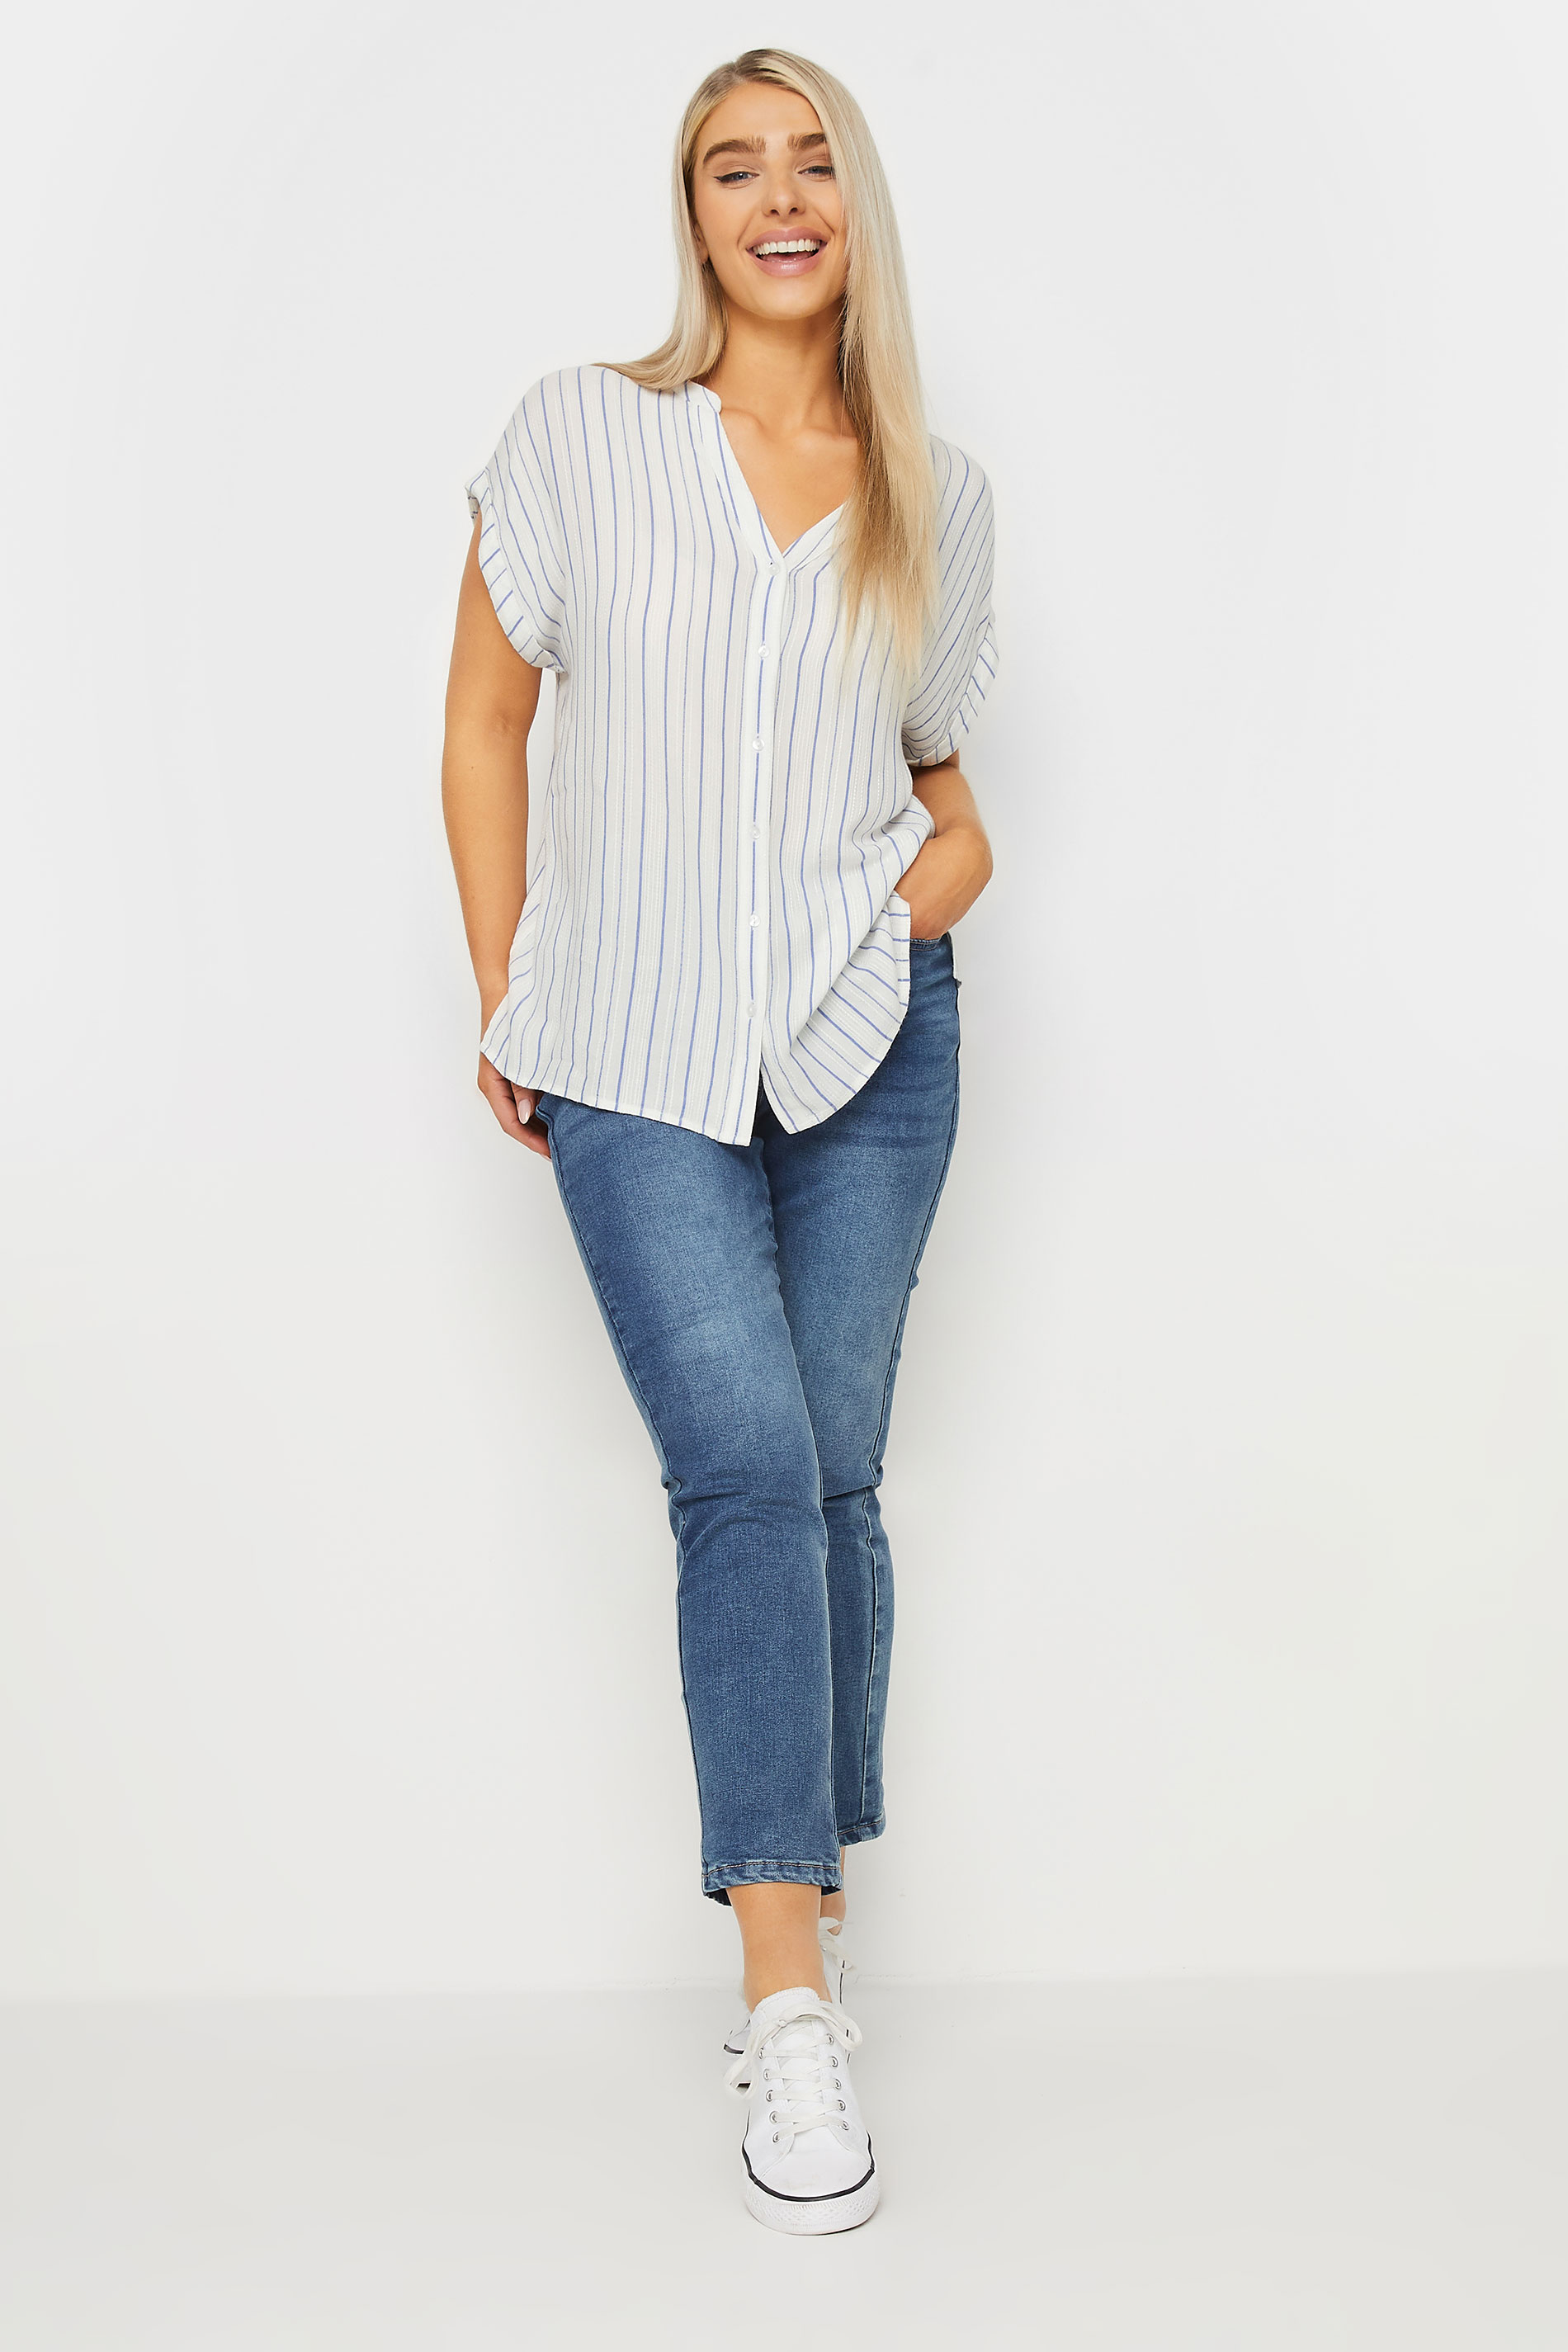 M&Co White Striped Dobby Shirt | M&Co 2